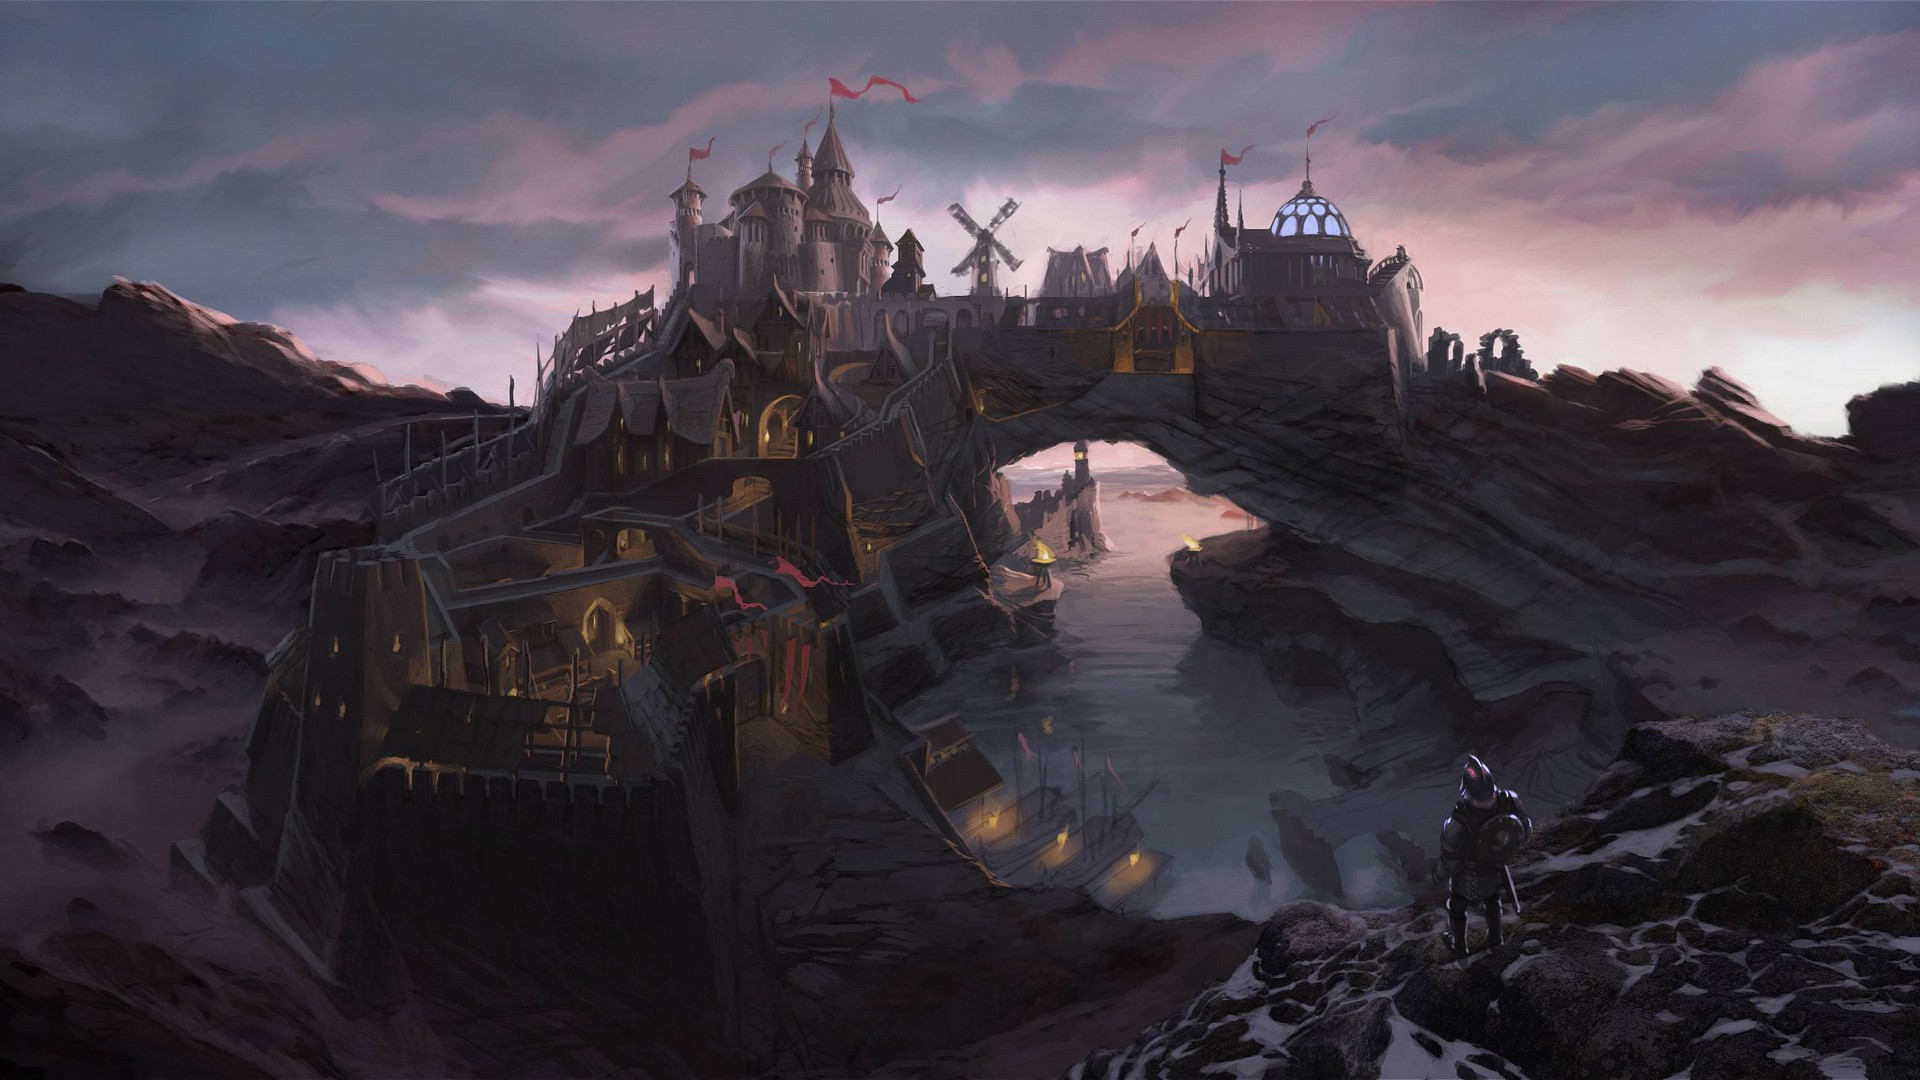 General 1920x1080 The Elder Scrolls V: Skyrim city fantasy art video games RPG PC gaming video game art